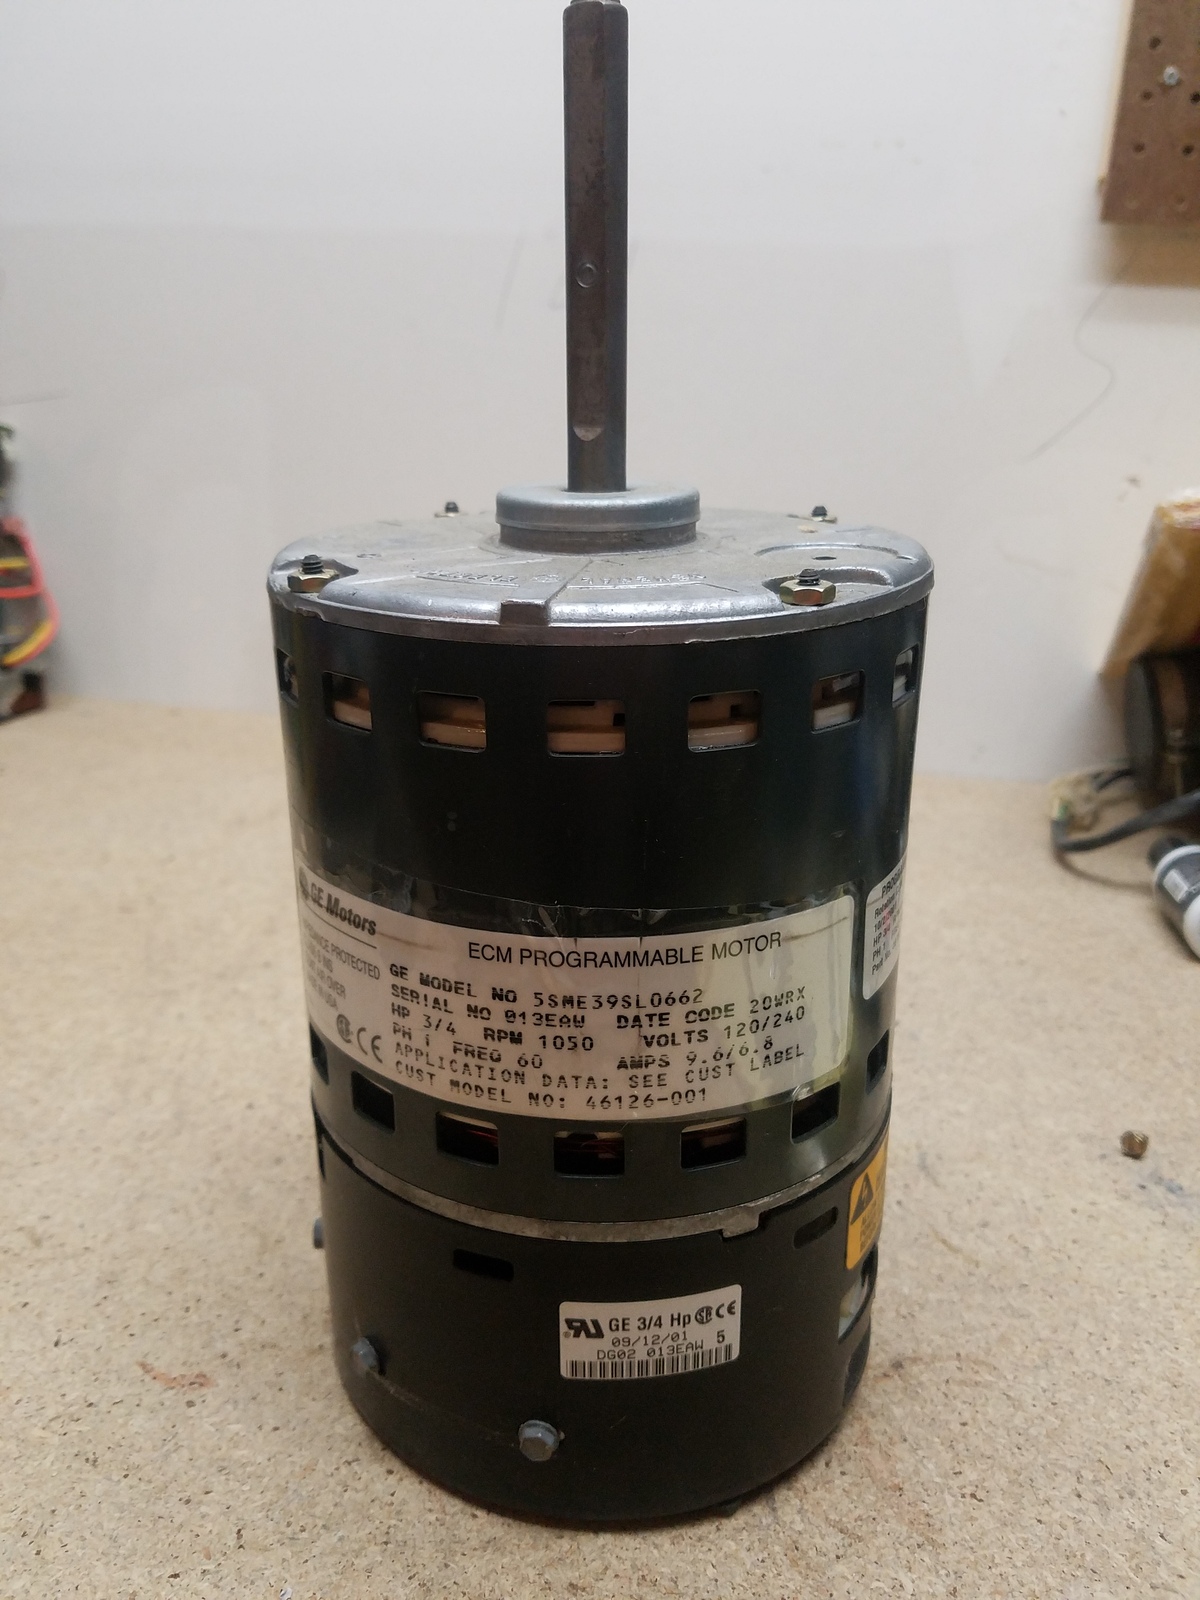 Armstrong oem furnace ecm programmable blower motor 46126-001 5SME39SL0662 - $450.00